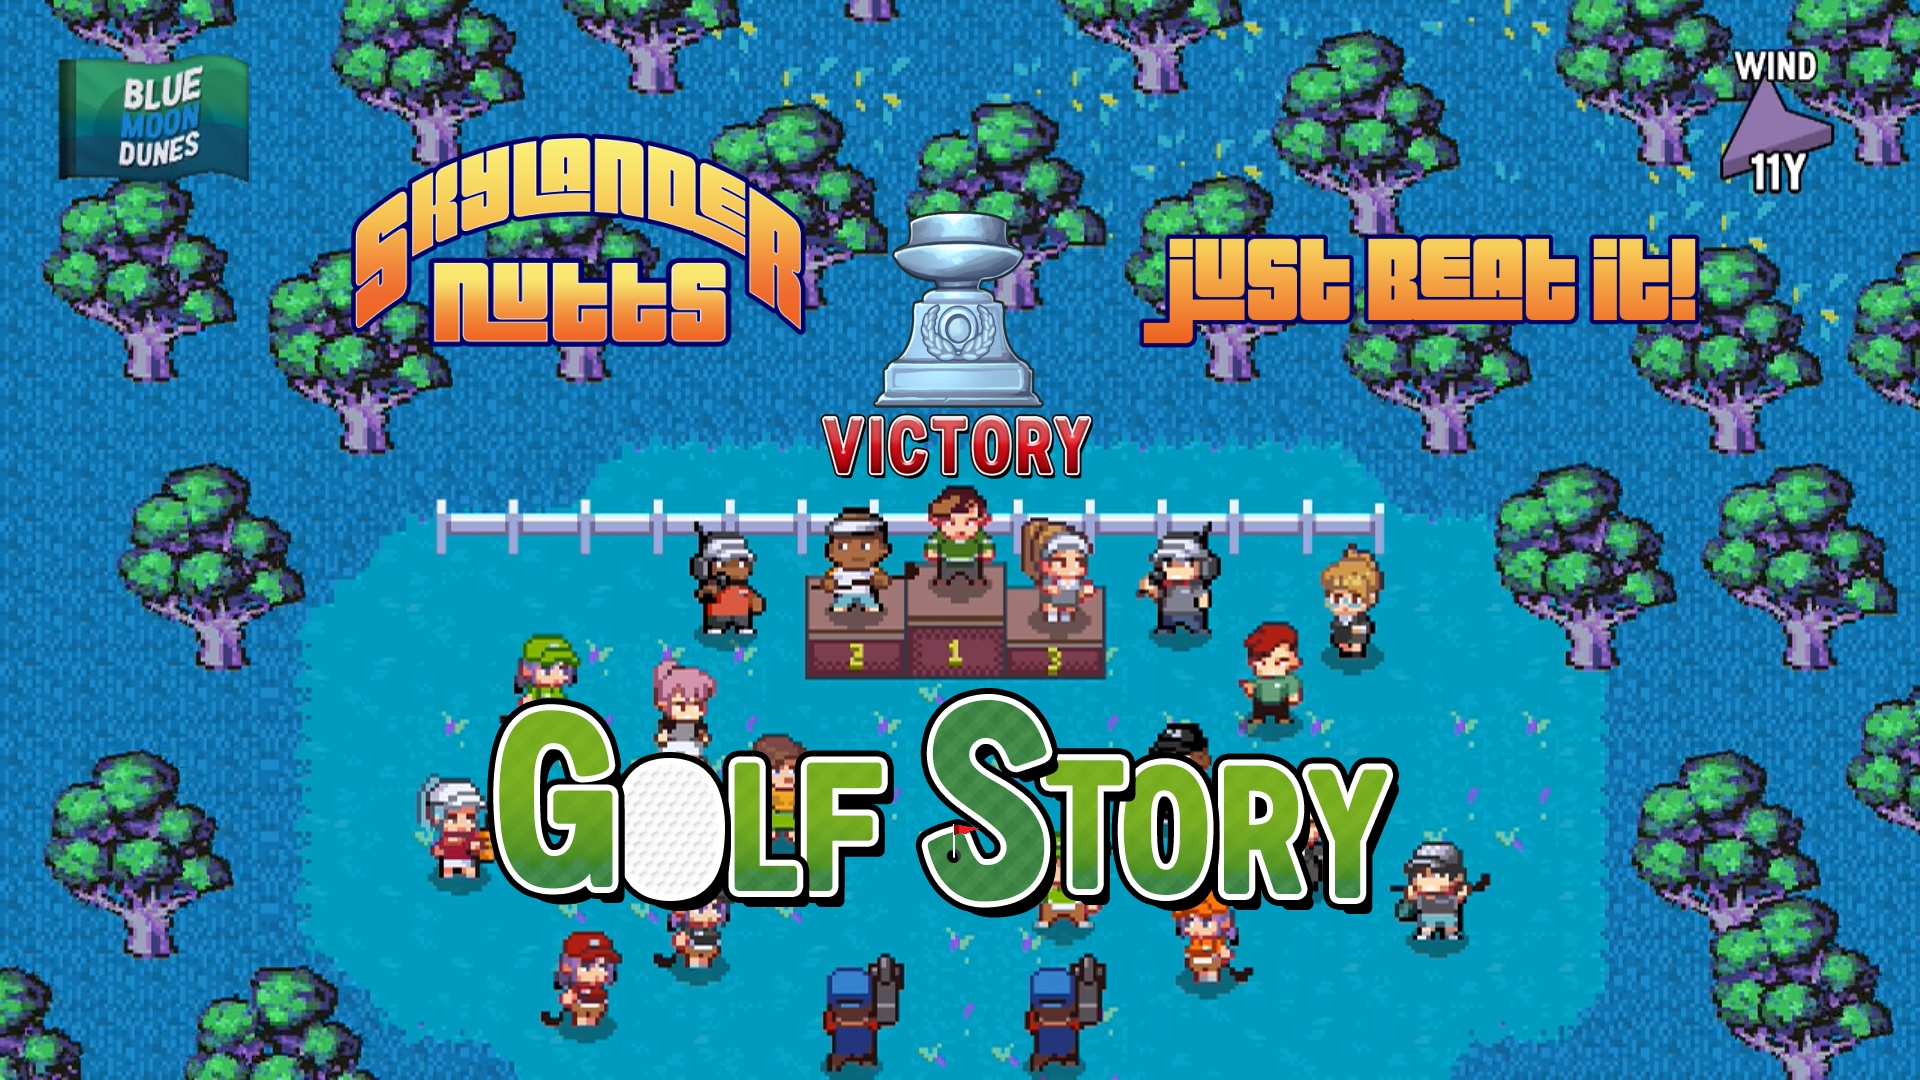 Just Beat It - Golf Story